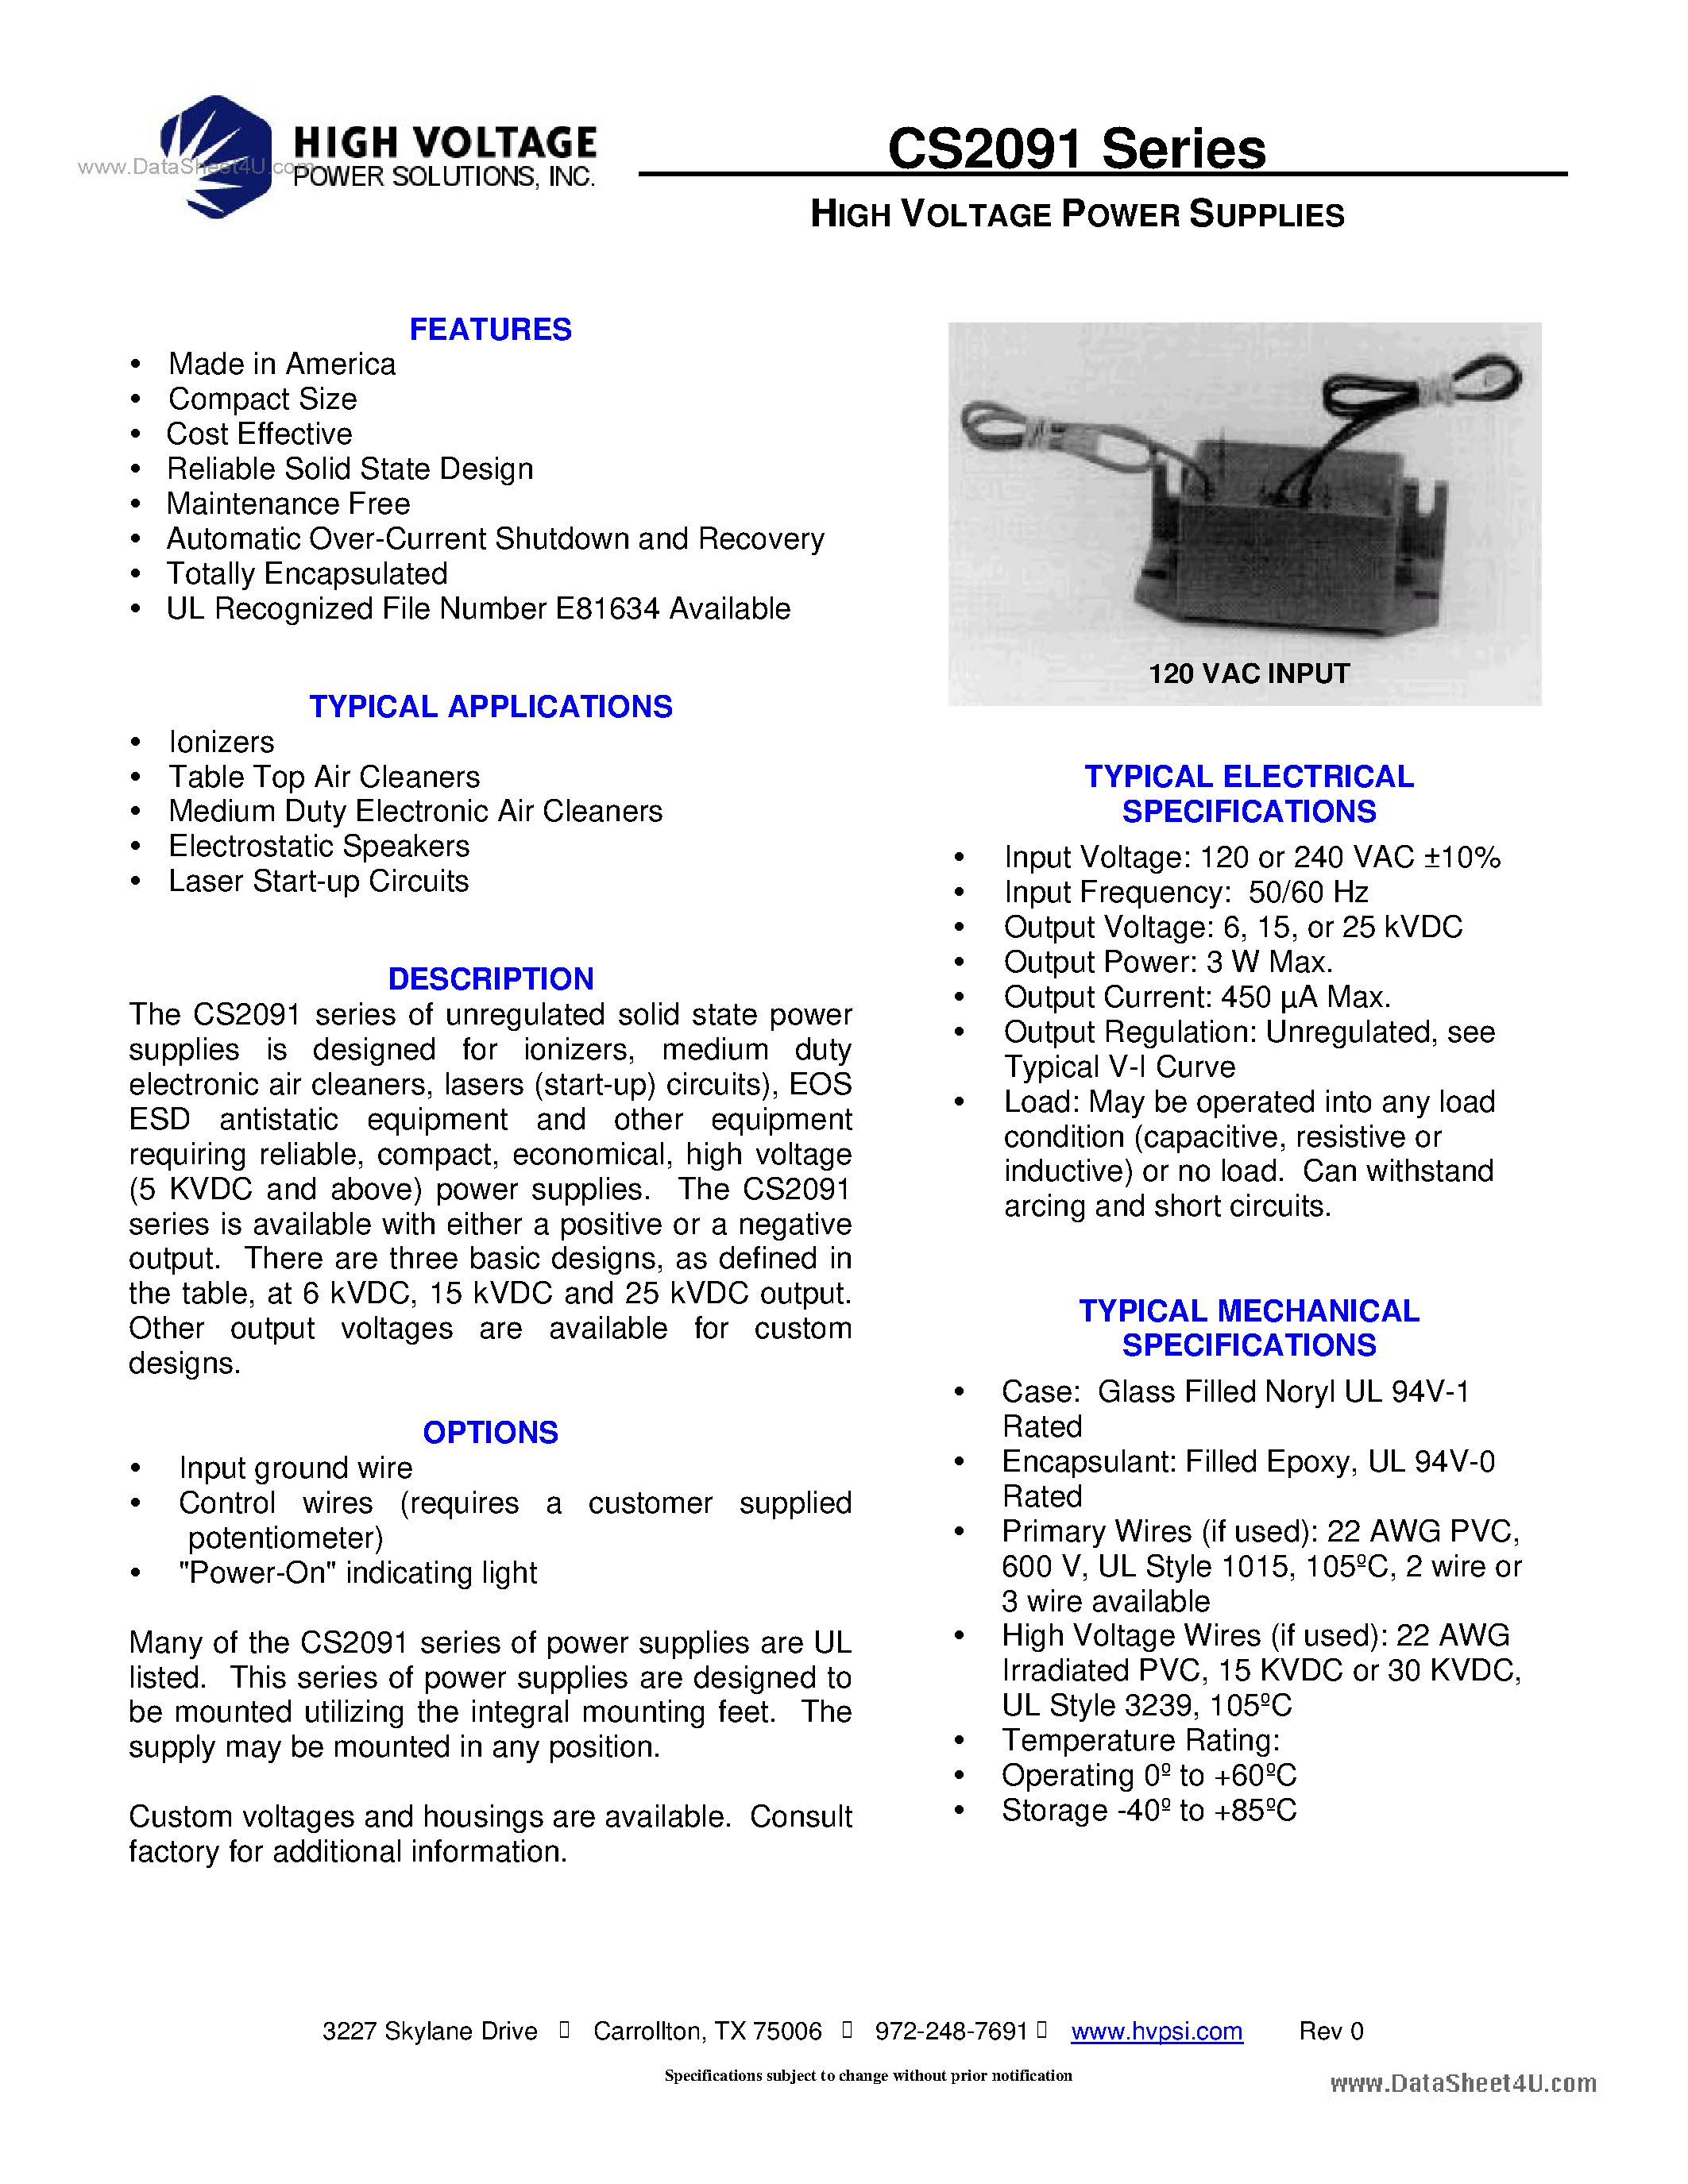 Даташит CS2091 - High Voltage Power Supplies страница 1